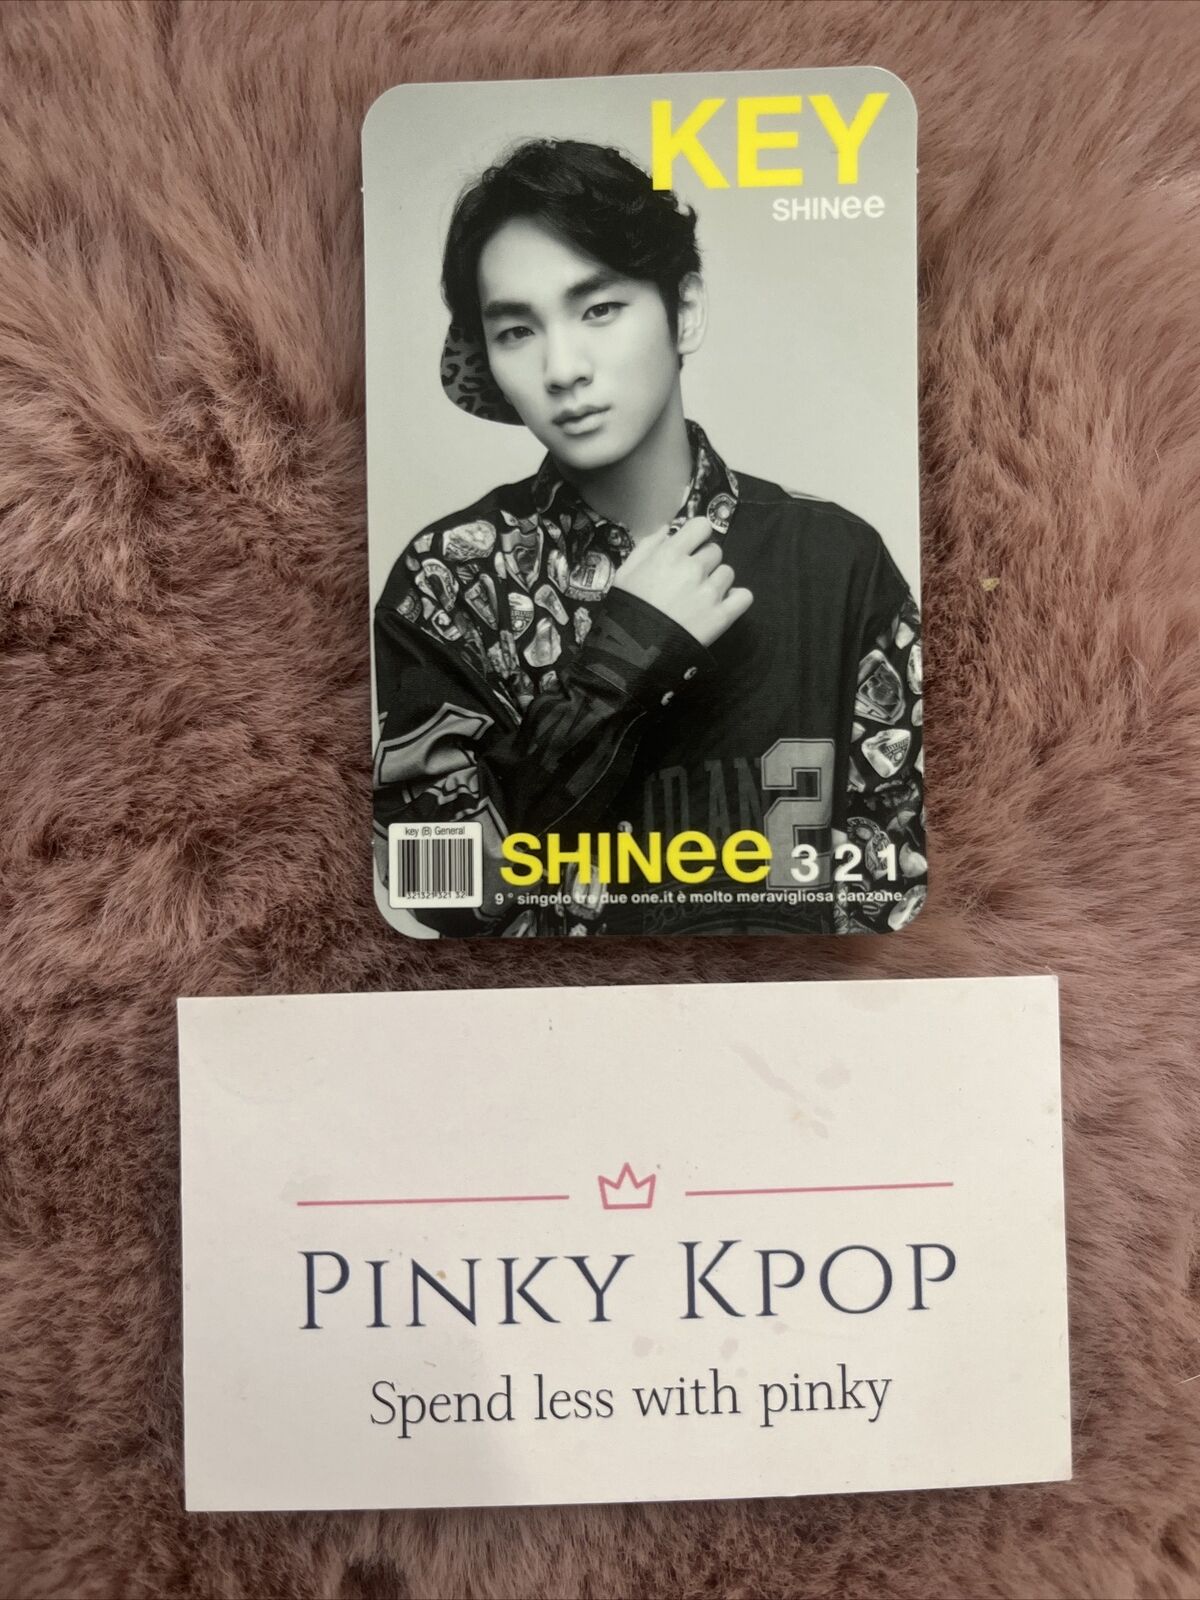 Shinee Key \' 3 2 1\' Official Photocard + FREEBIES